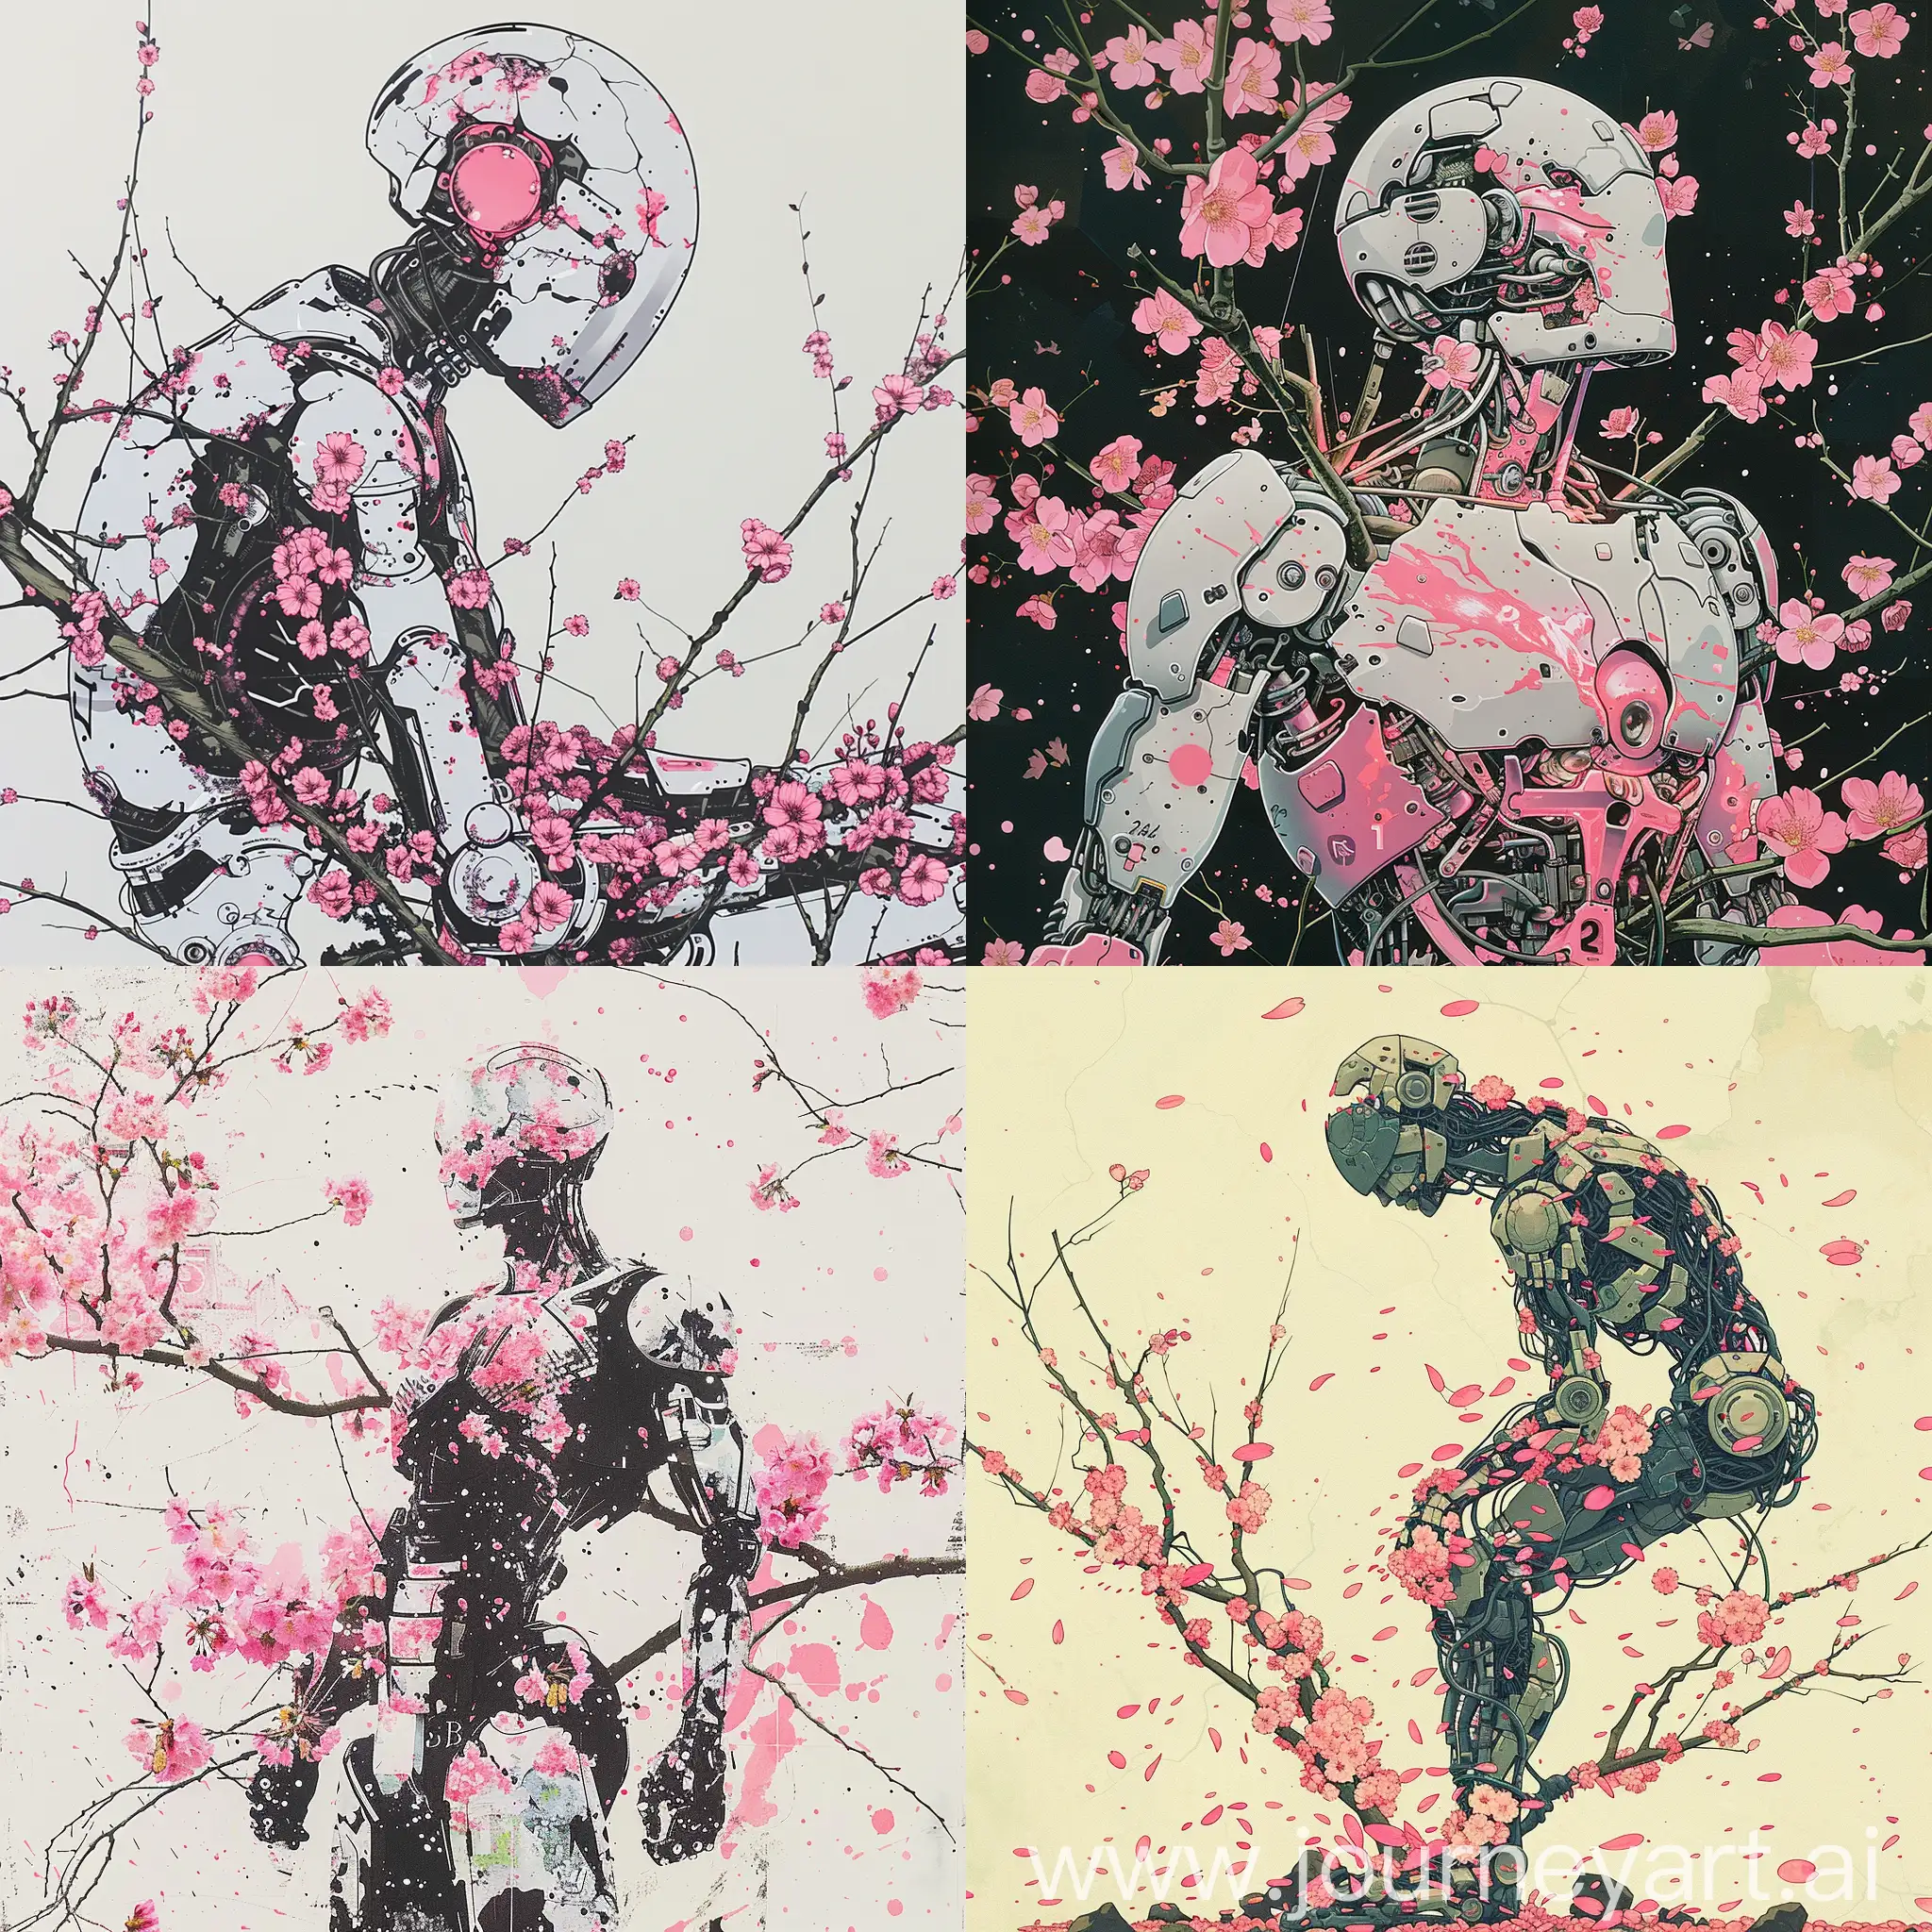 2B-from-Nier-Pop-Art-Masterpiece-Featuring-Pink-Cherry-Blossoms